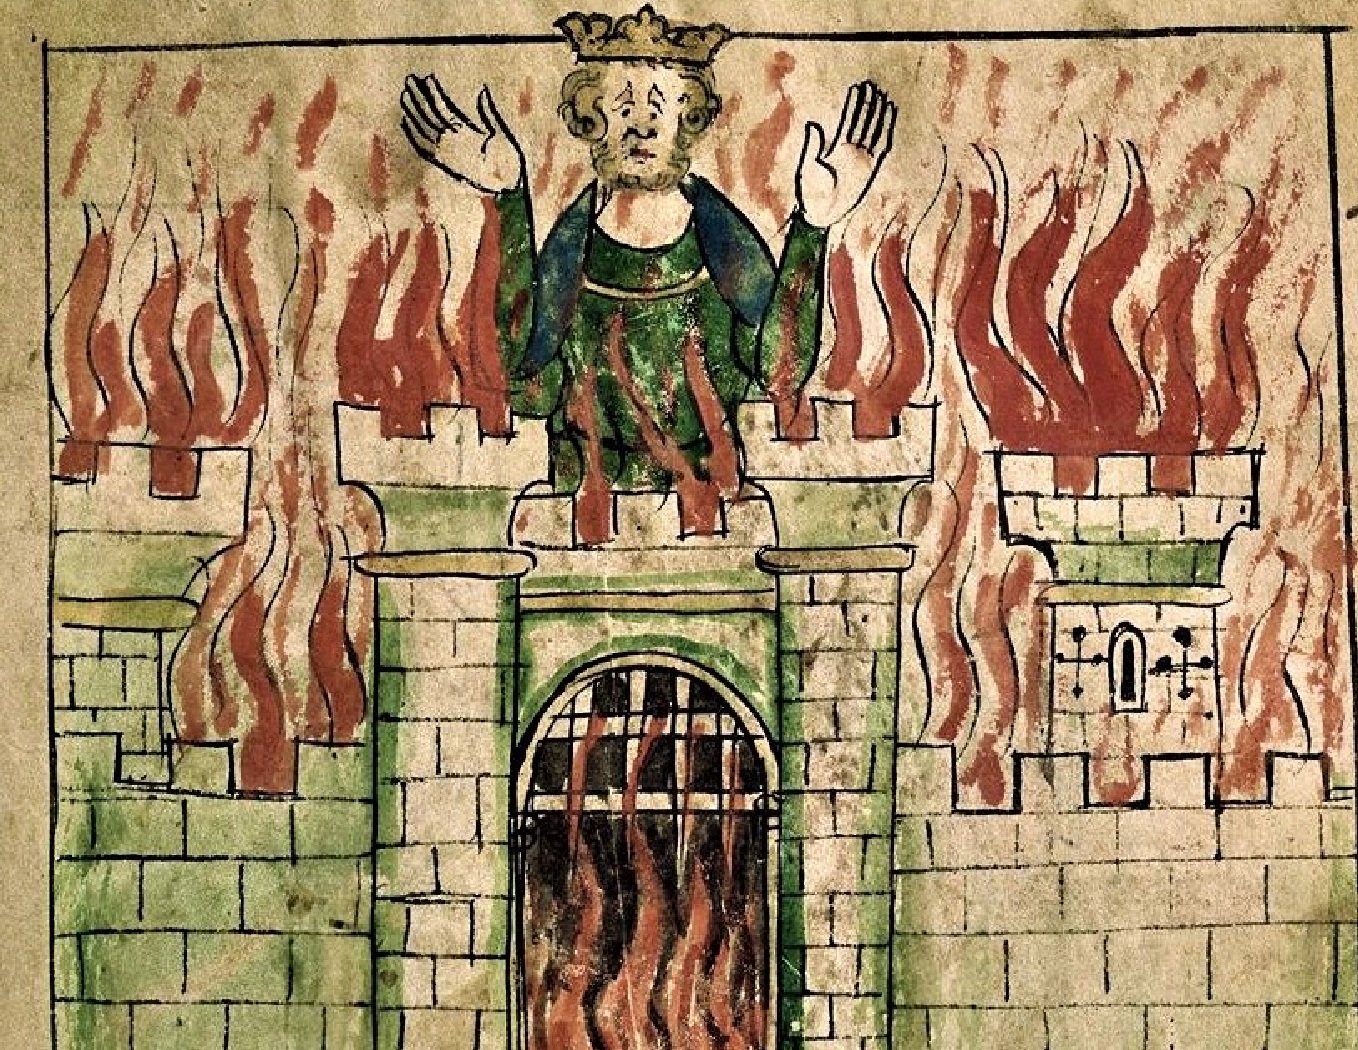 Vortigern, a half-legendary 5th-century British ruler, is depicted in his burning castle.